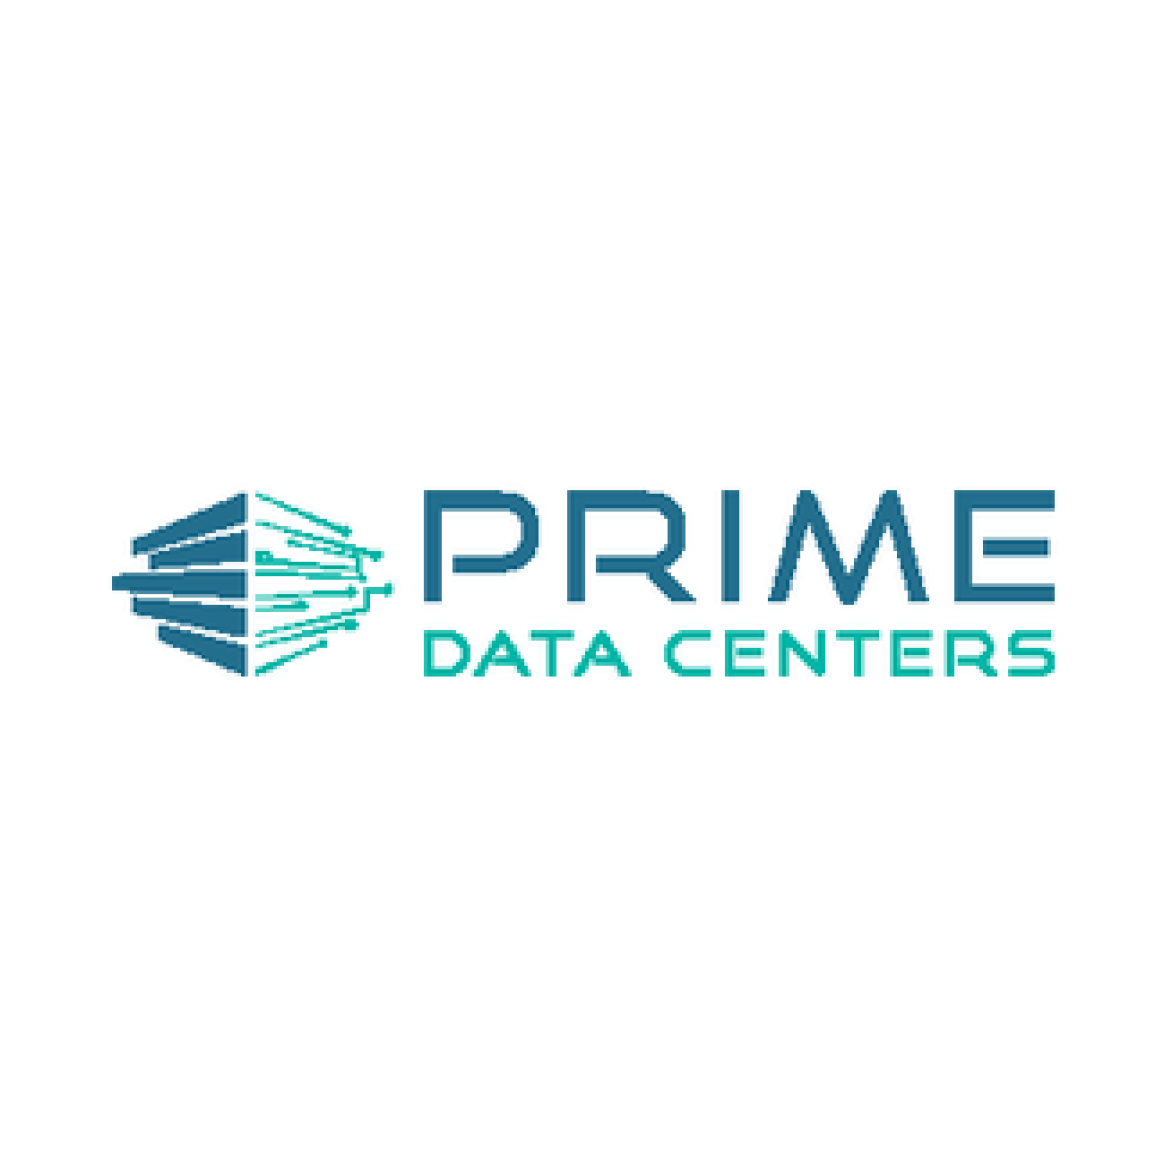 Prime Data Centers